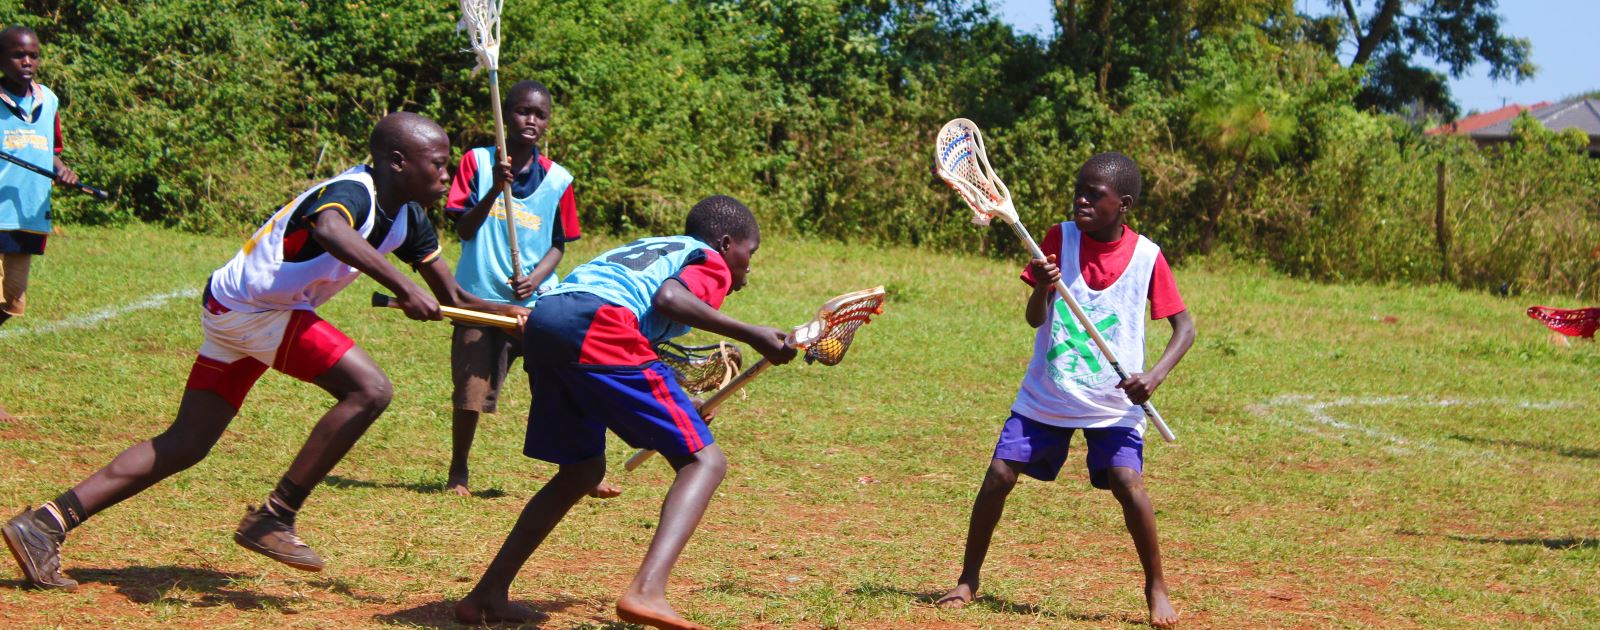 Kids Lacrosse Africa